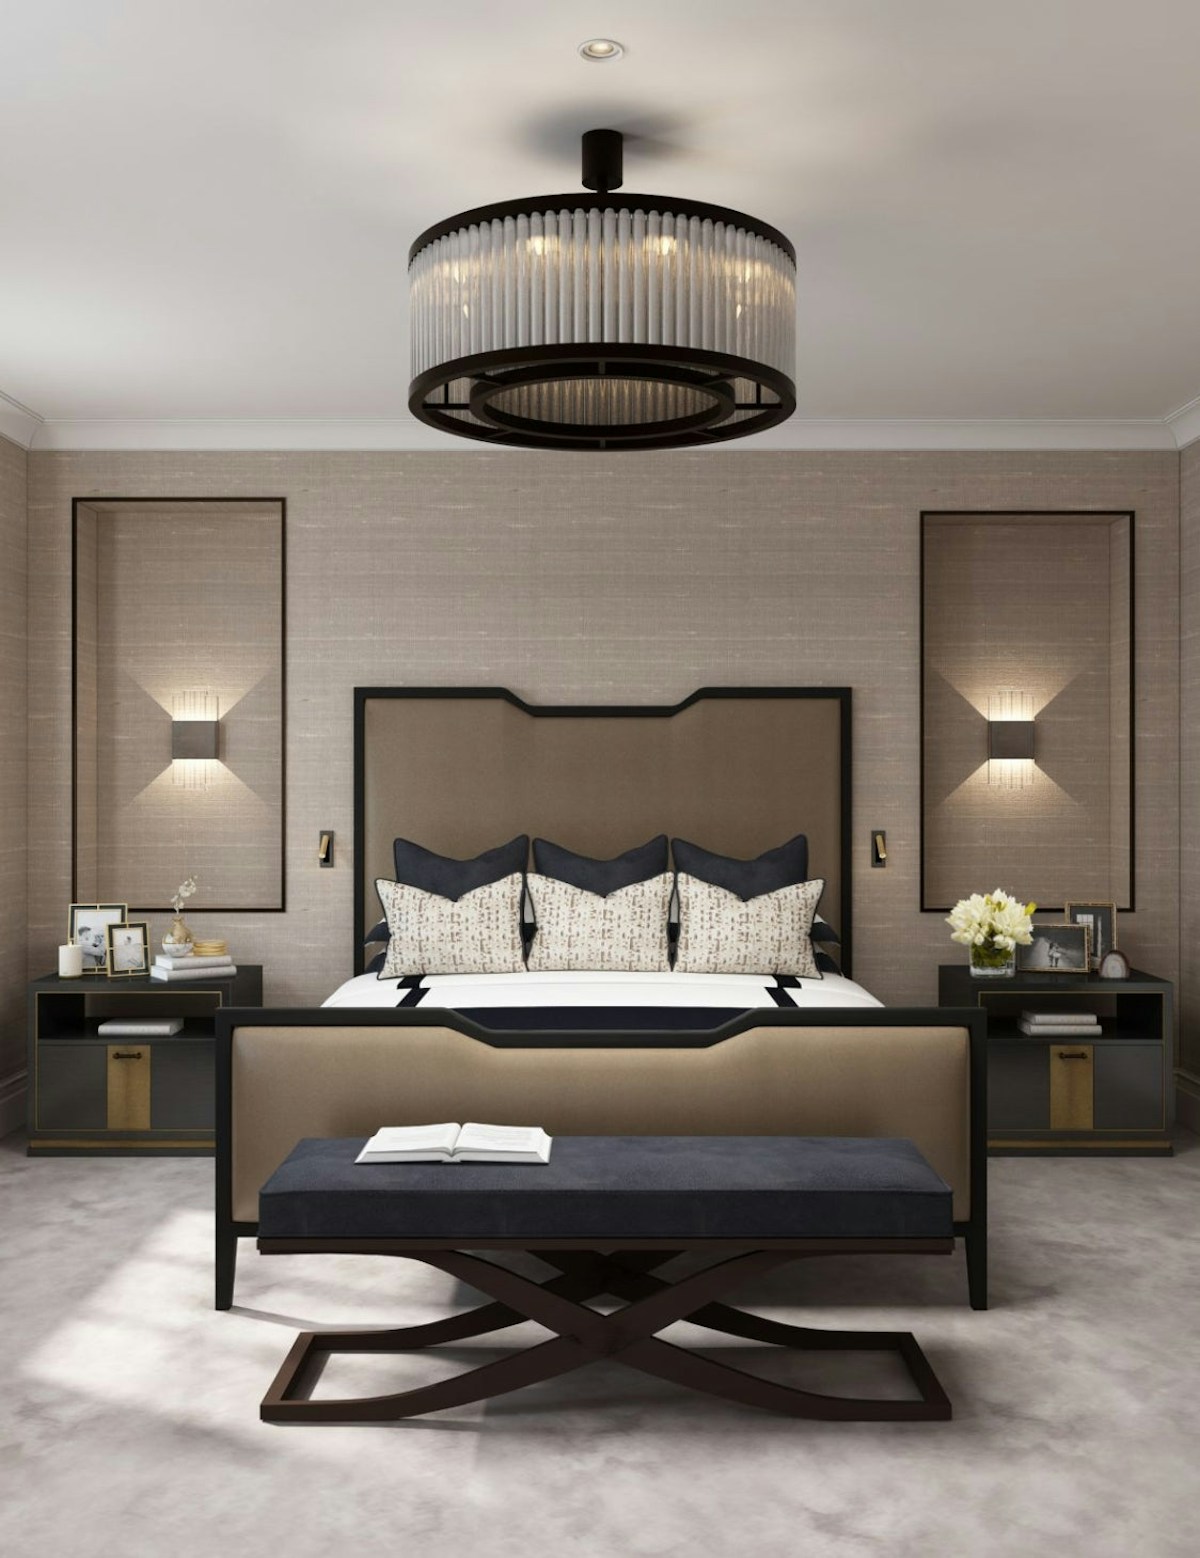 Luxury Interior Lighting Guide | Room Lighting Ideas | LuxDeco.com Style Guide